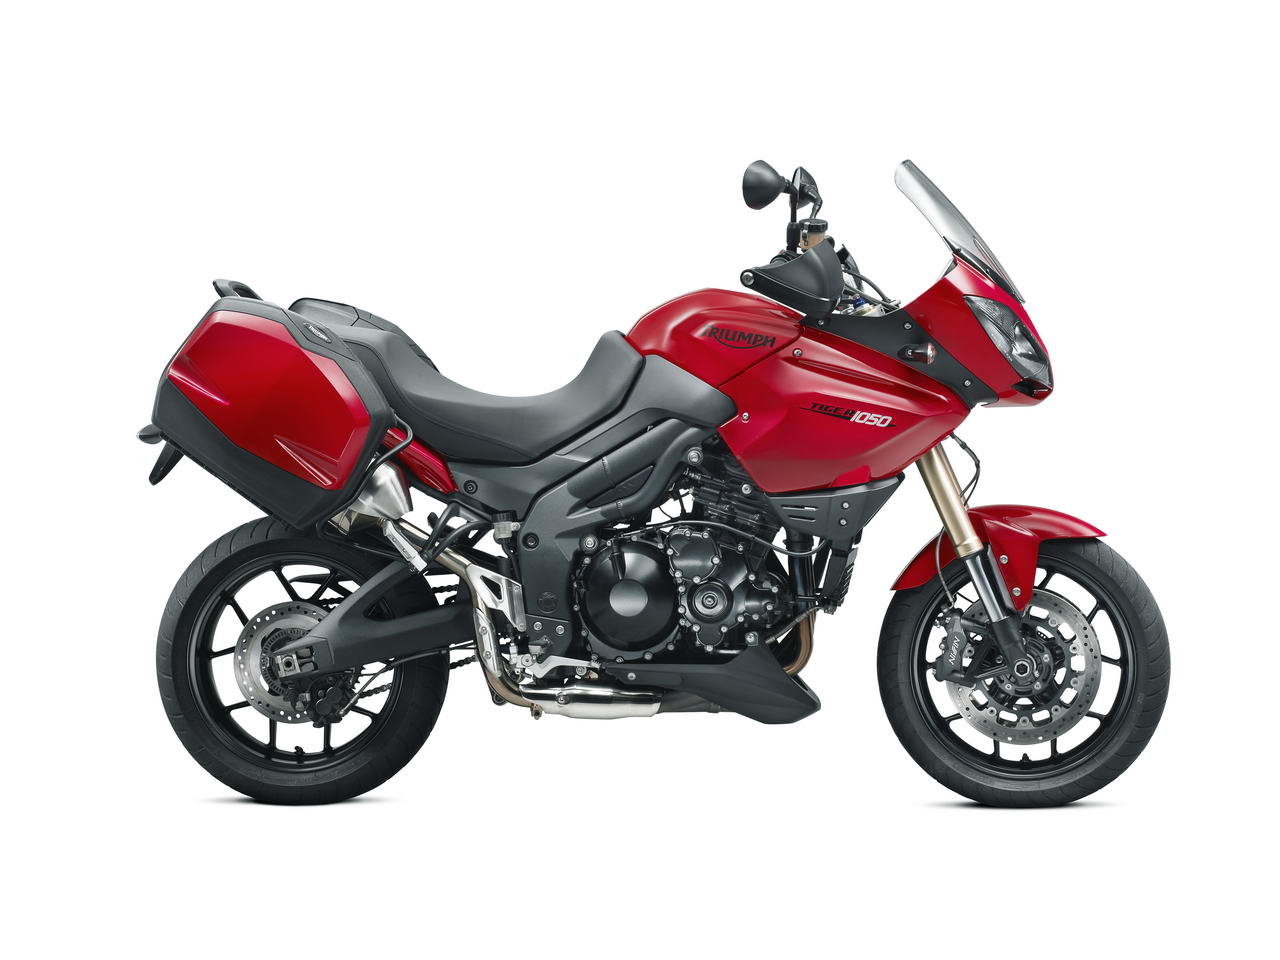 Listino Kawasaki Versys 1000 Granturismo on-off - image 15286_triumph-tiger1050 on https://moto.motori.net